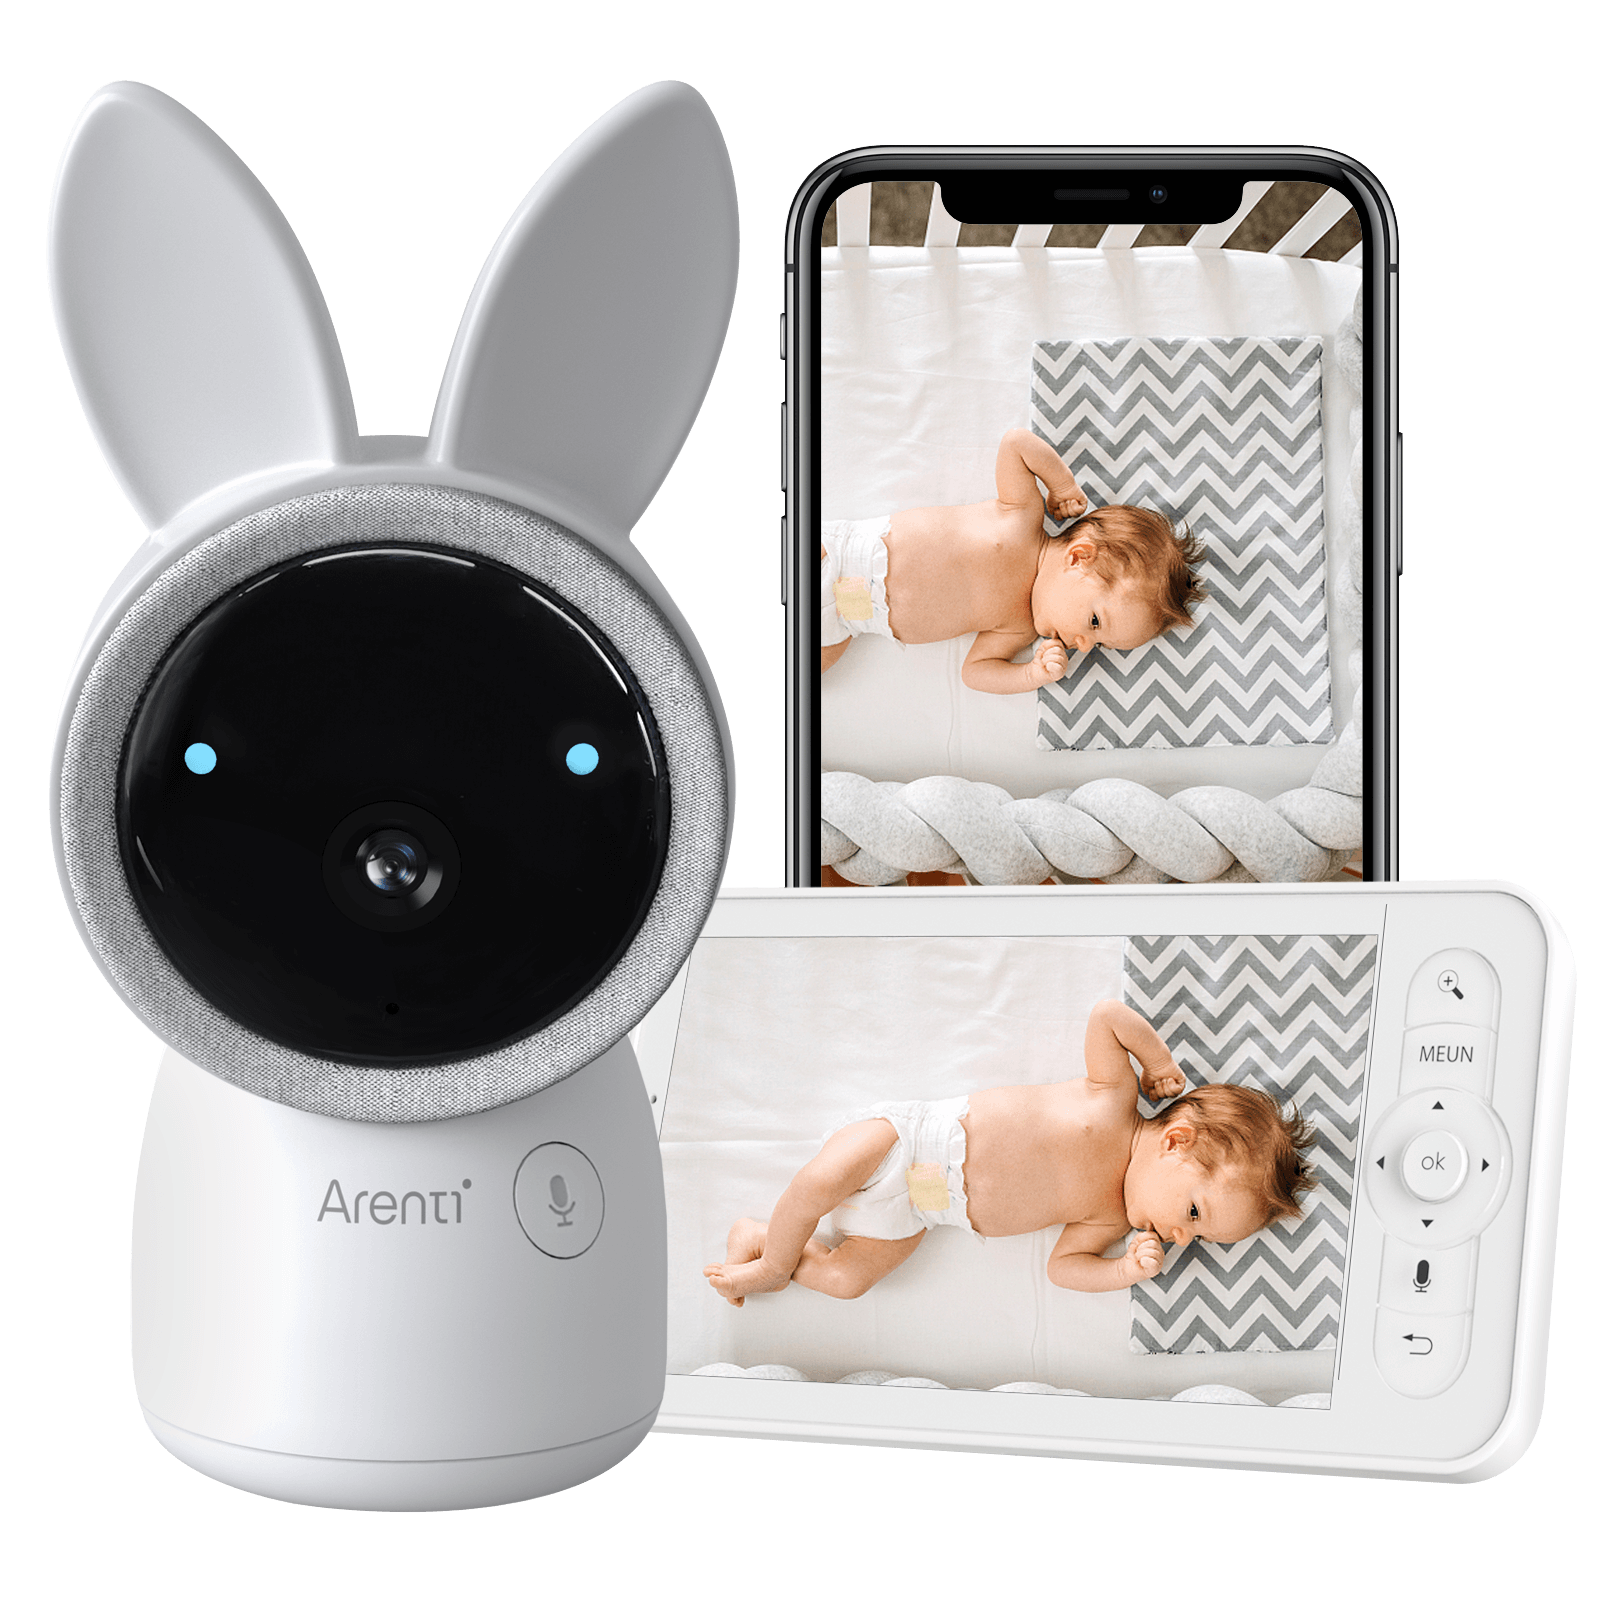 Arenti AInanny 2K Ultra HD Video Pan-Tilt Baby Monitor